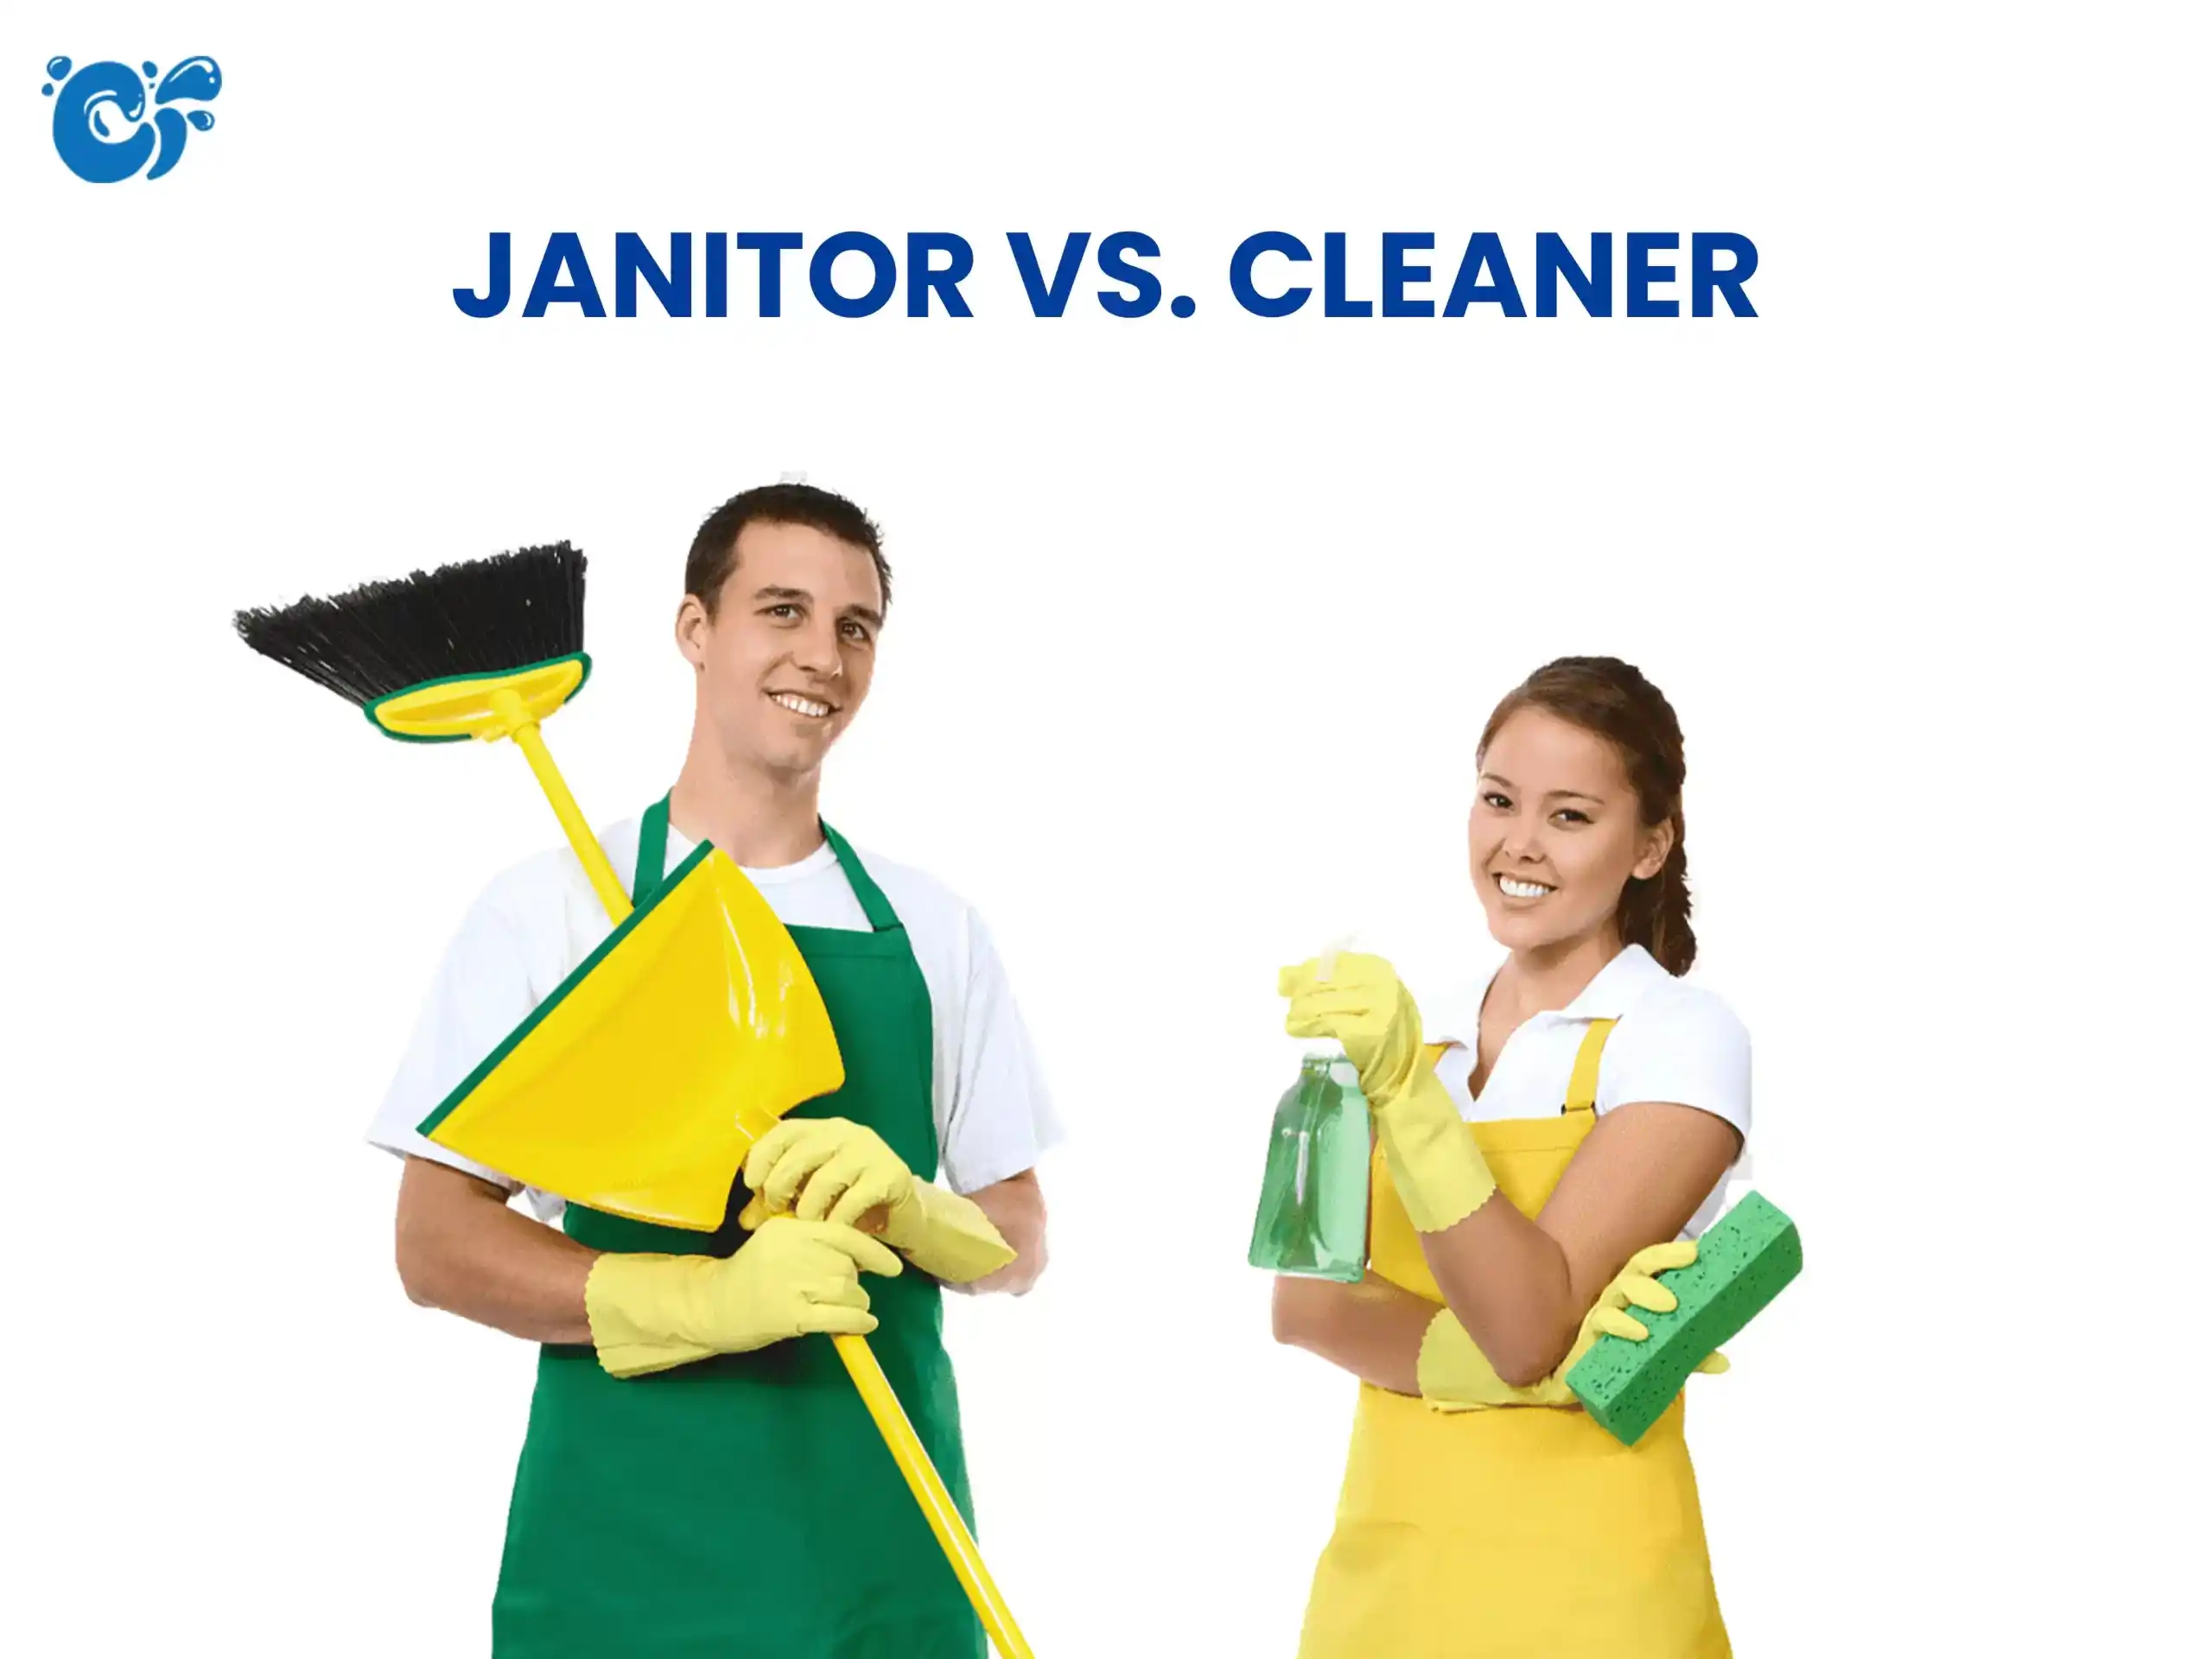 Janitor vs. Cleaner